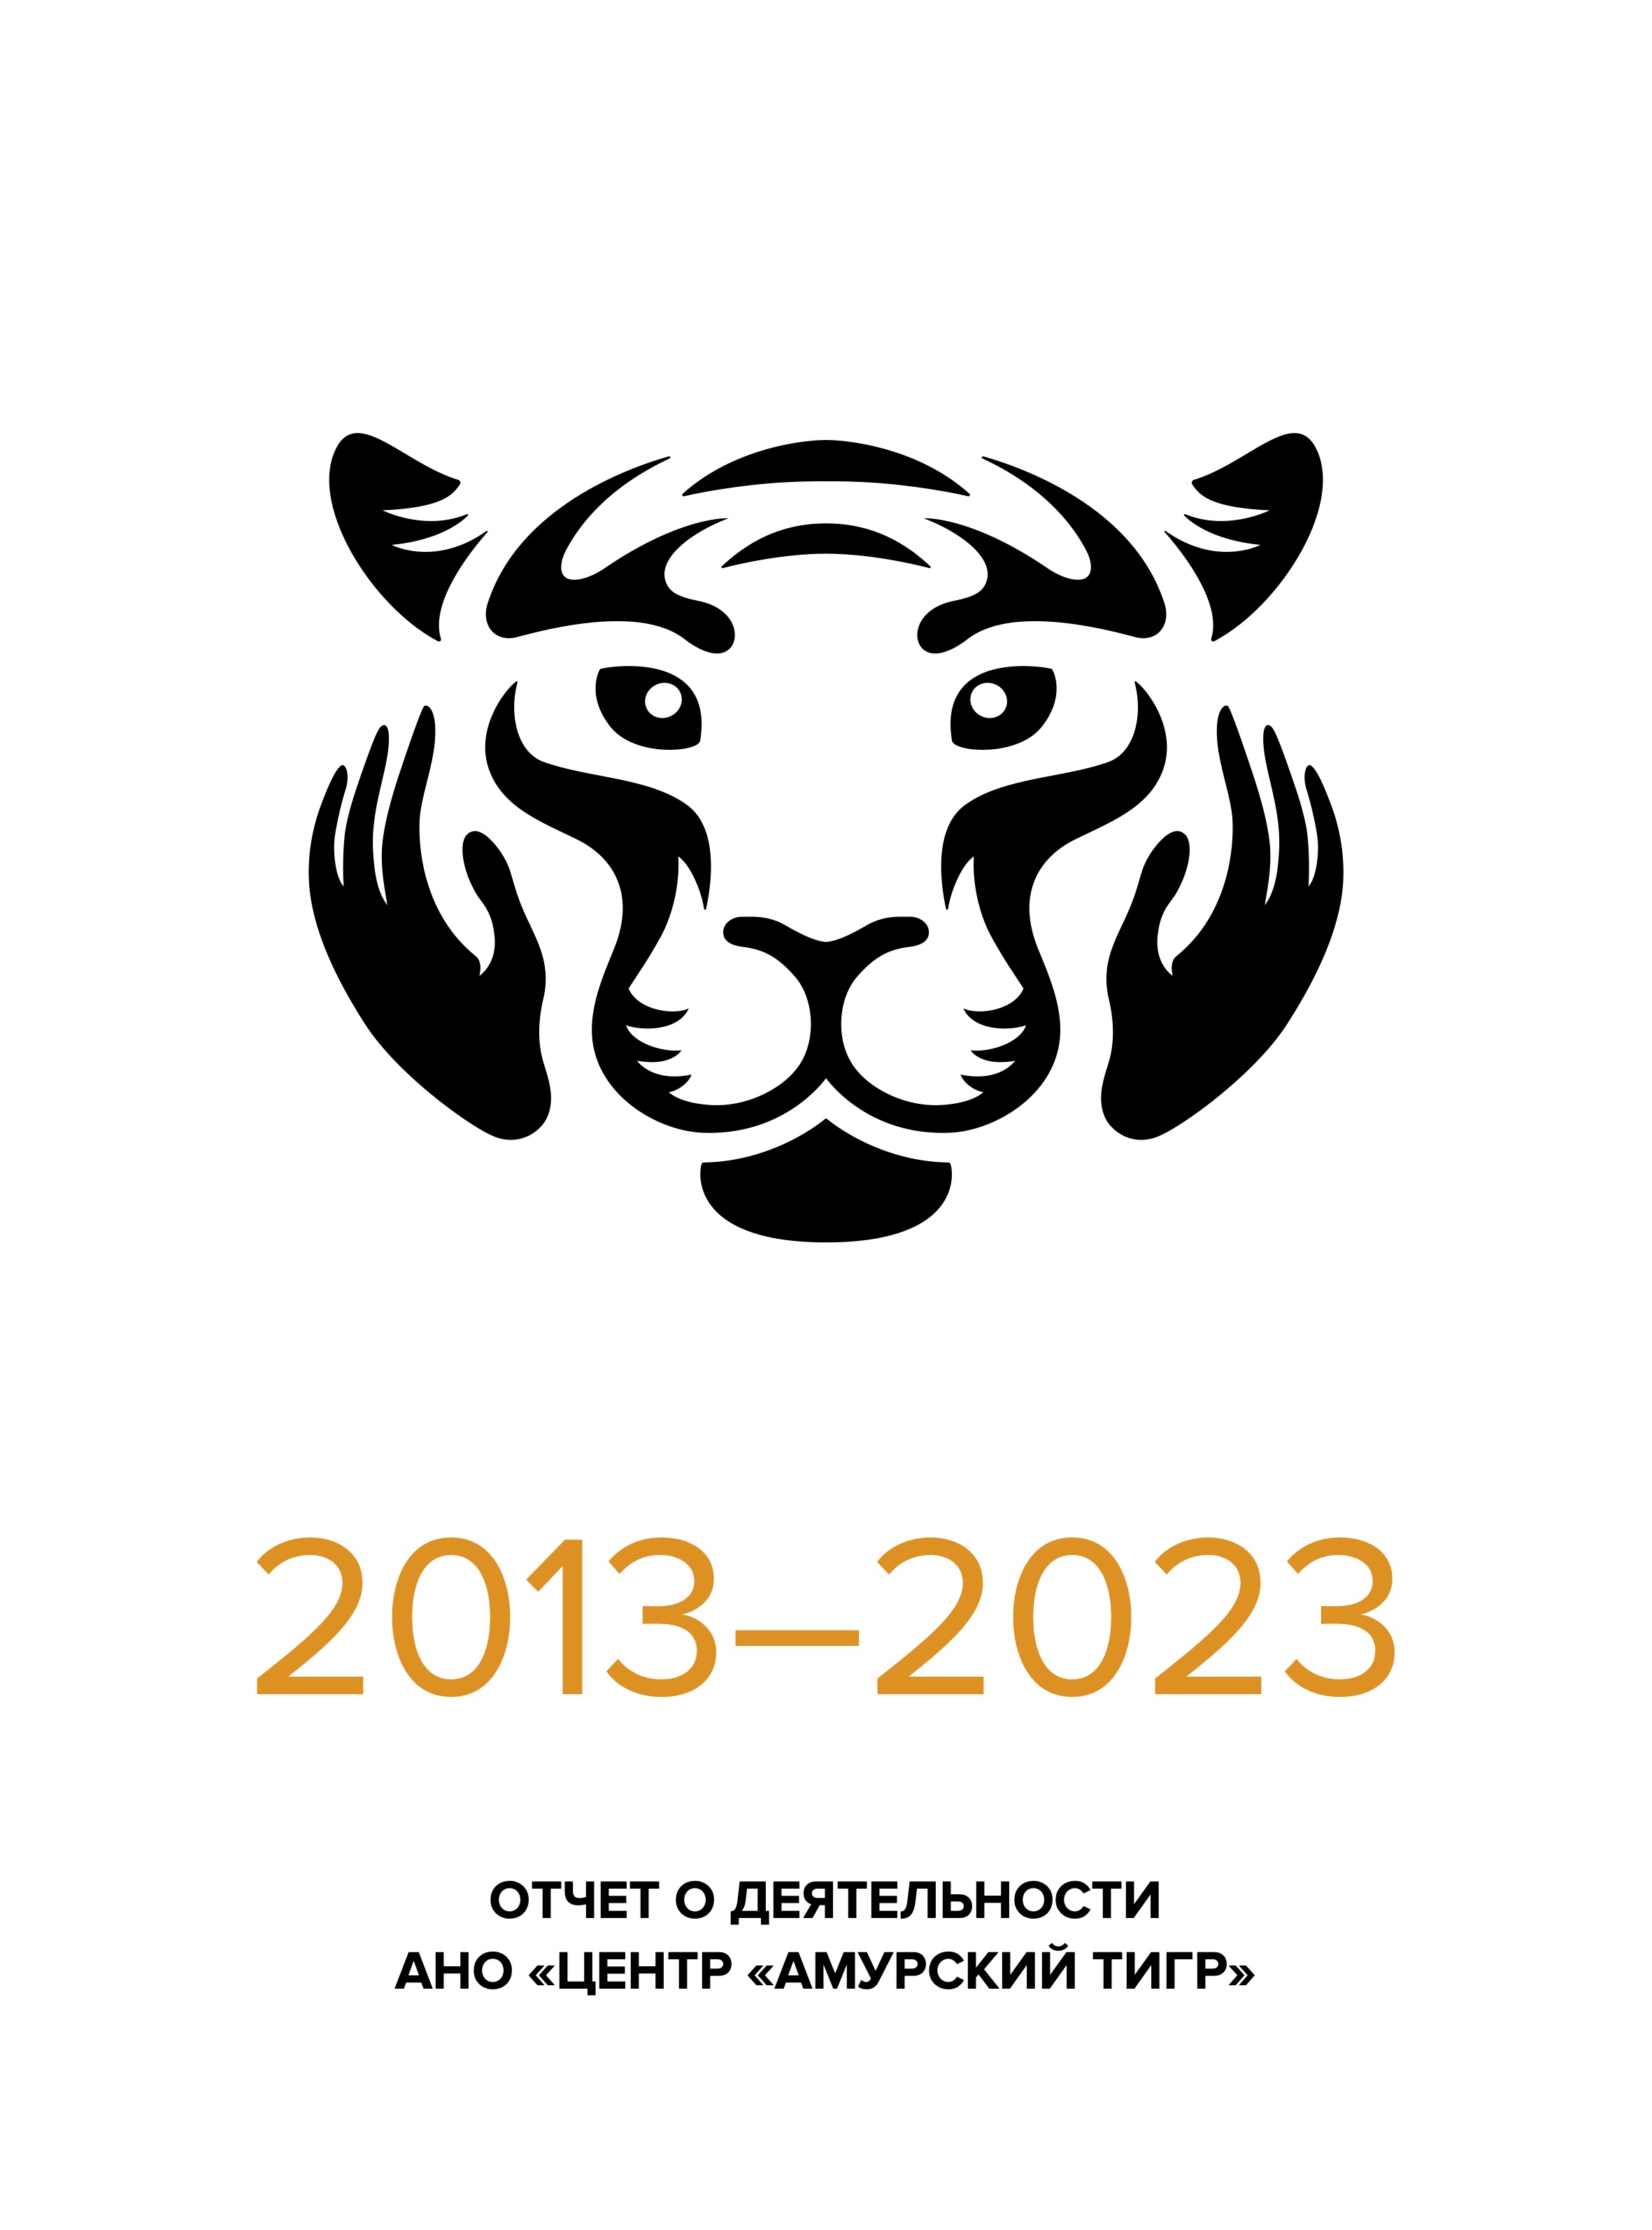 Amur Tiger Center report 2013-2023